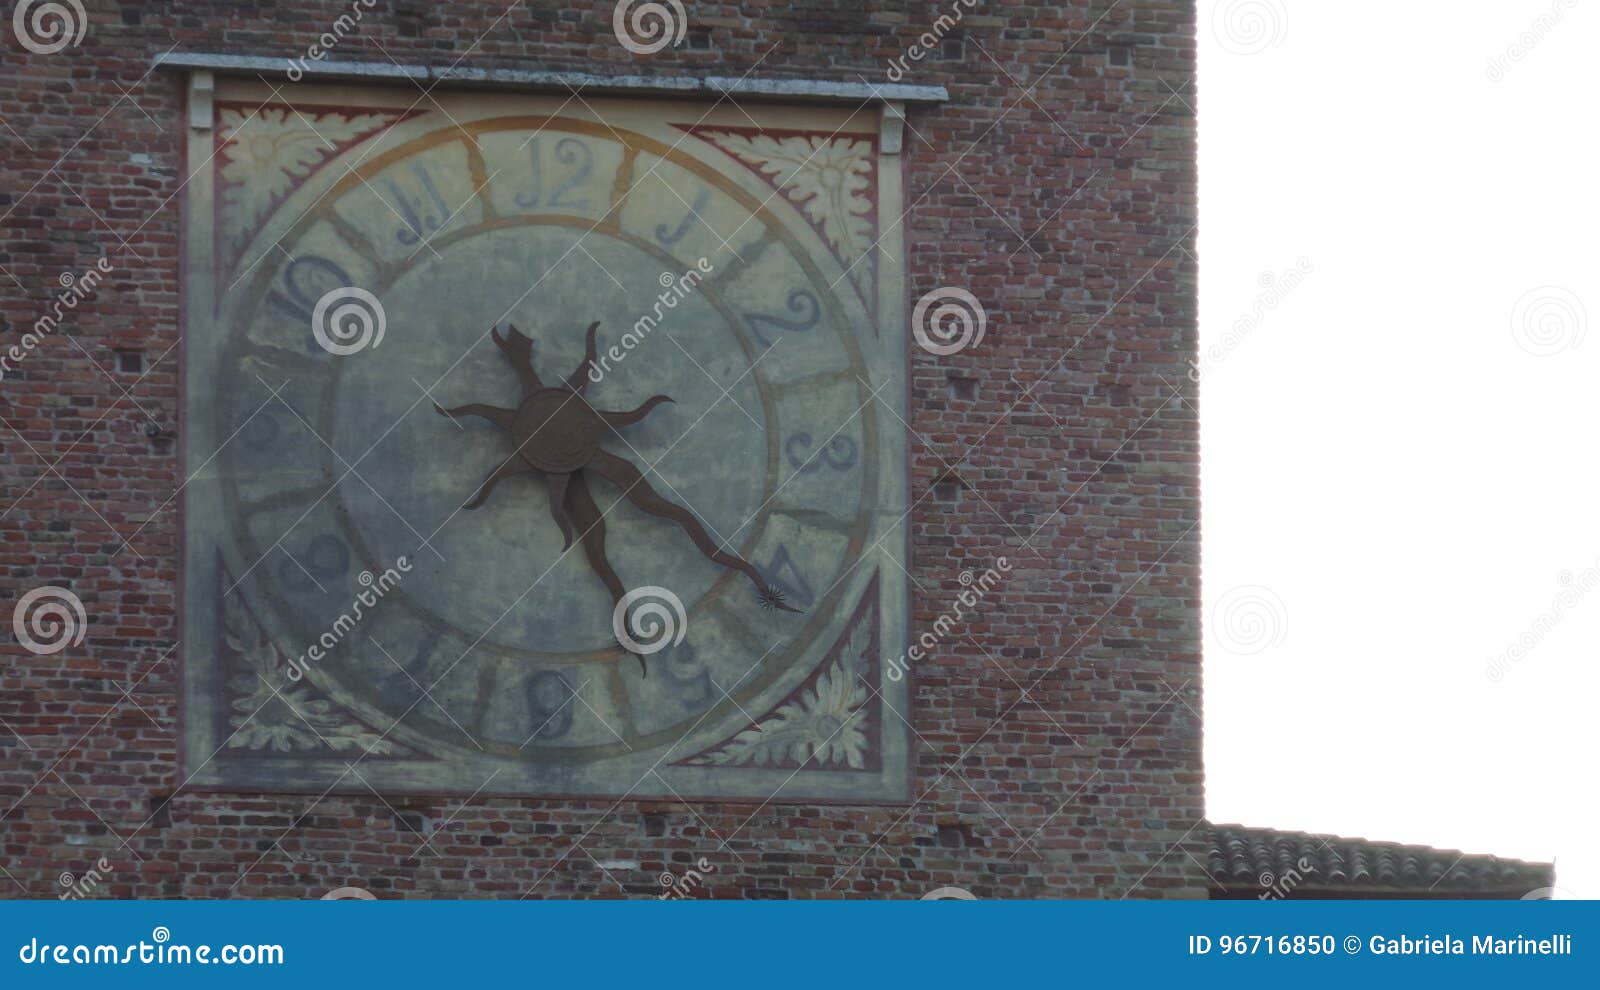 clock in verona